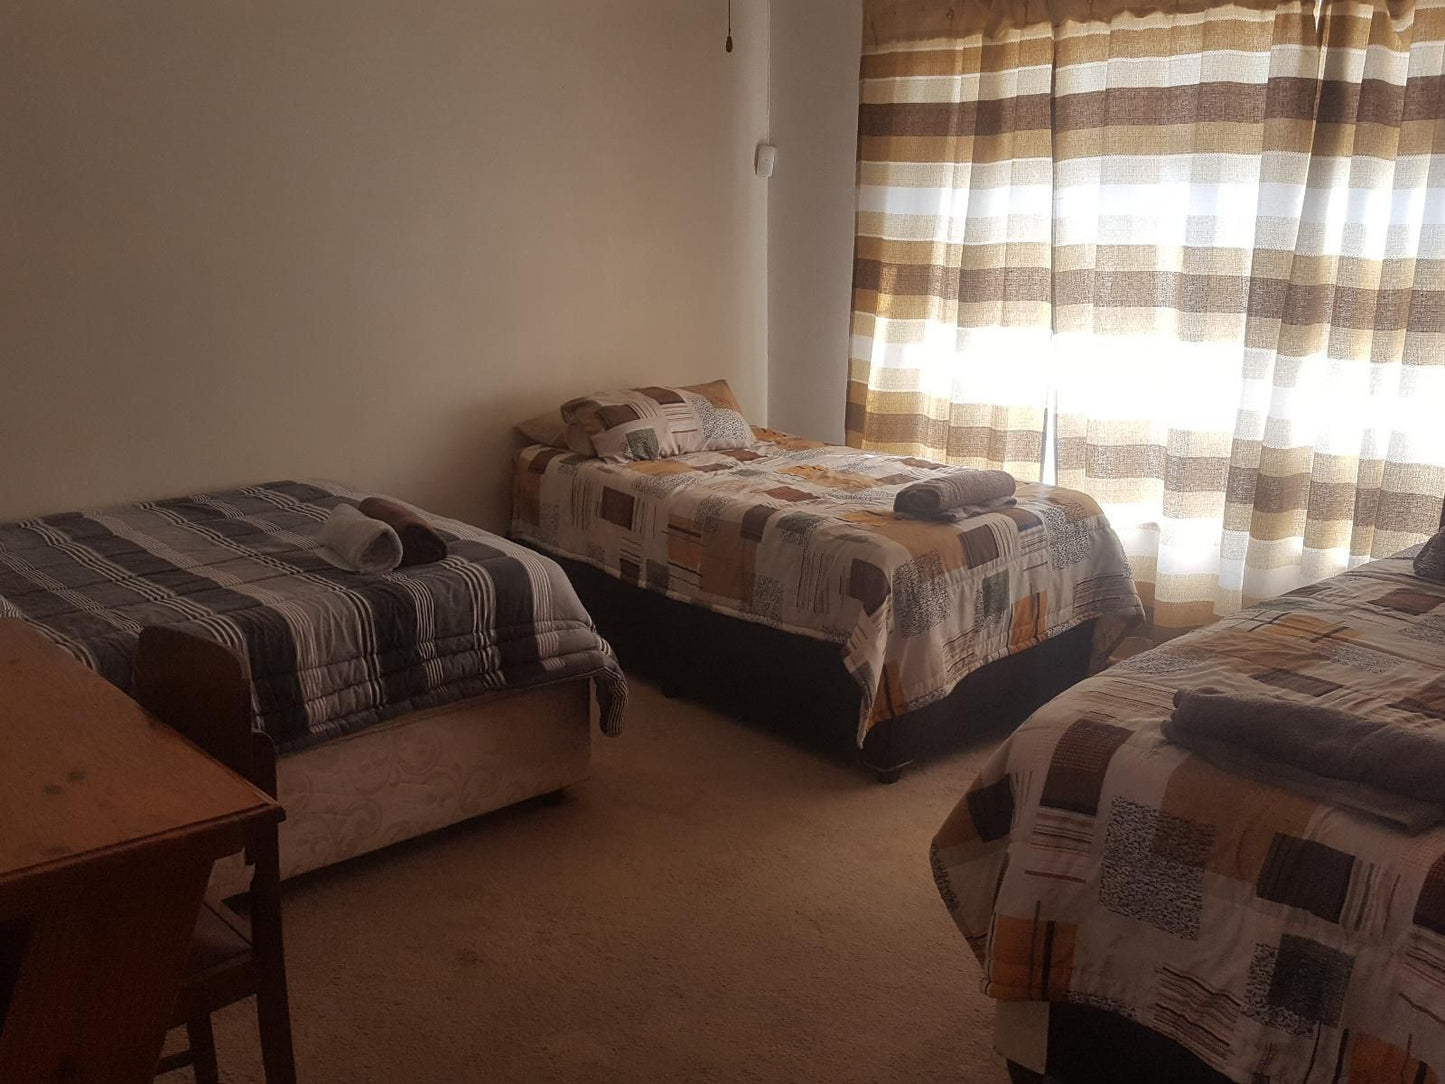 House Cottage And Contractors Manor Mooilande Vereeniging Gauteng South Africa Bedroom